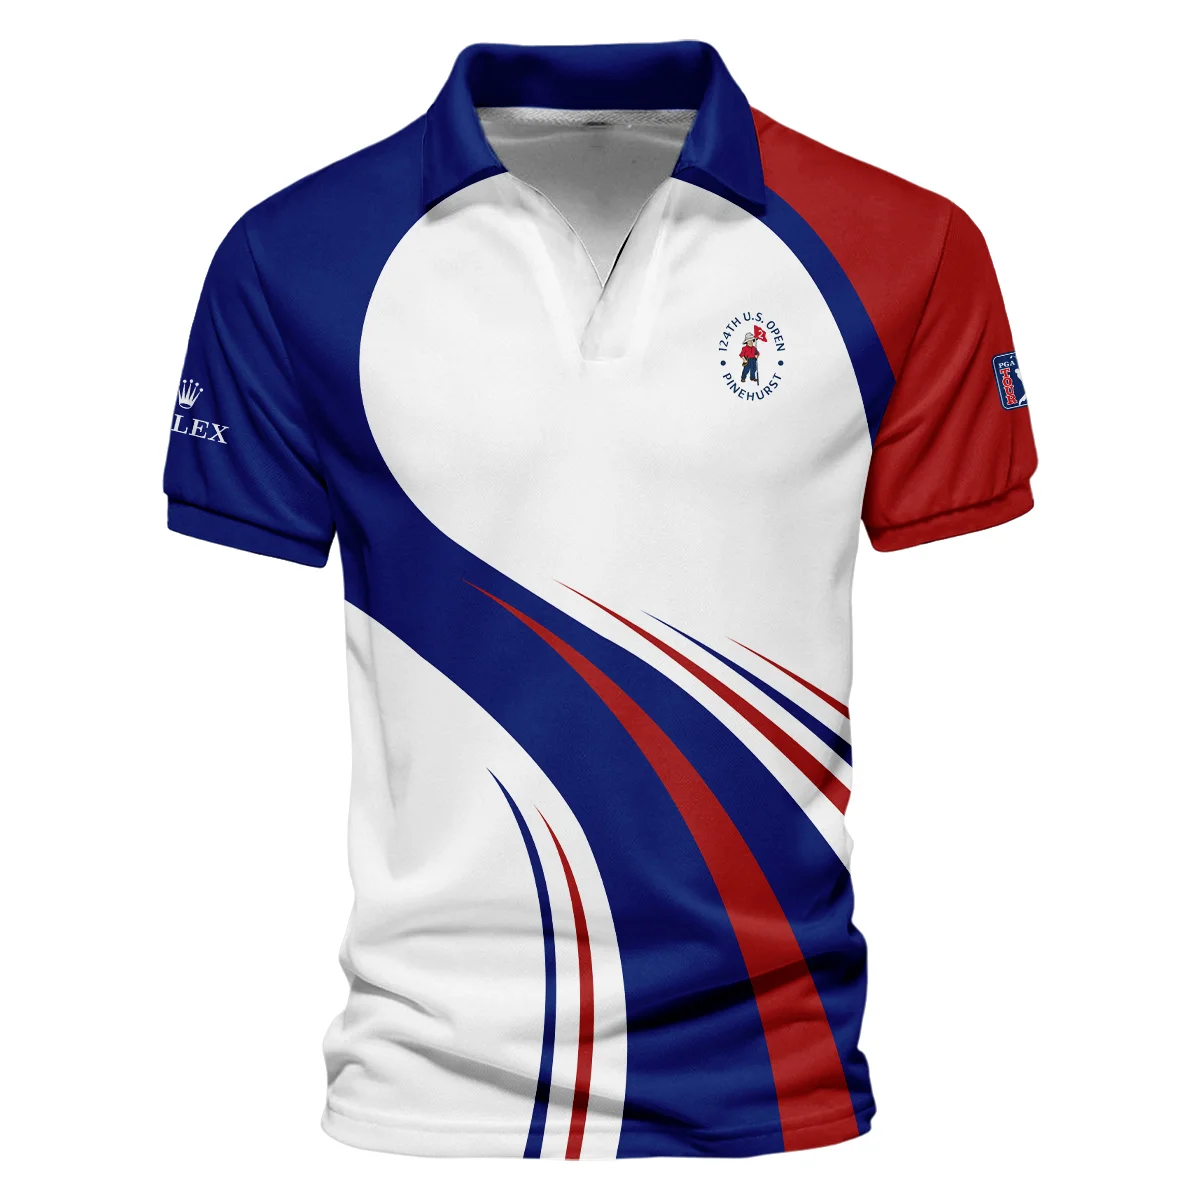 Rolex 124th U.S. Open Pinehurst Golf Blue Red White Background Vneck Polo Shirt Style Classic Polo Shirt For Men